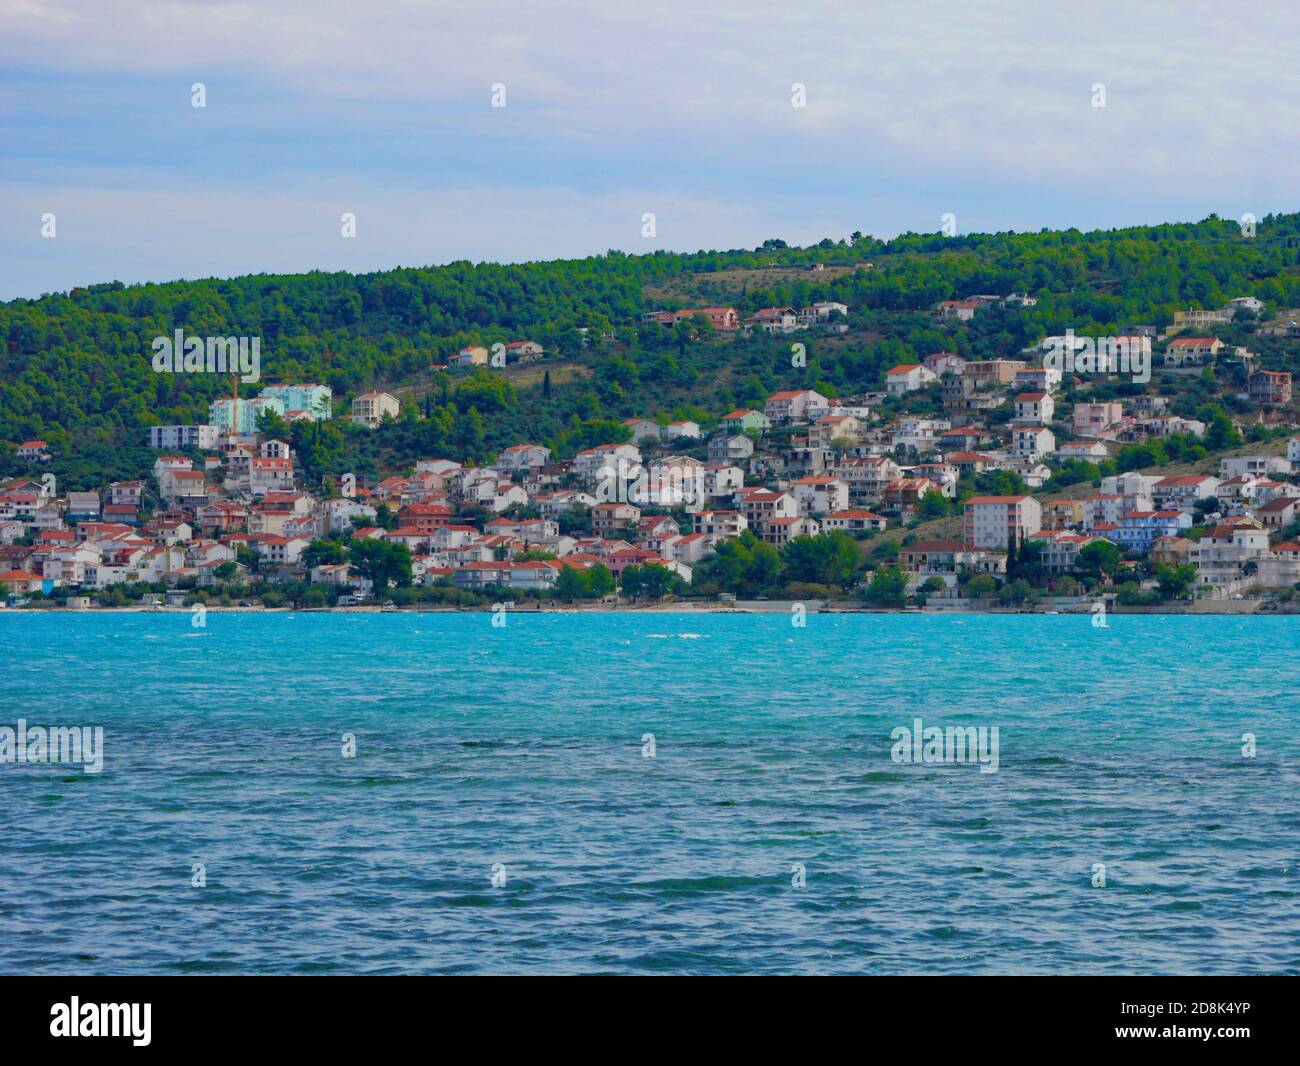 Adriatic Sea and landscape of Trogir, Croatia. Trogir is popular travel destination in Dalmatia Croatia and is a UNESCO World Heritage Site. Stock Photo